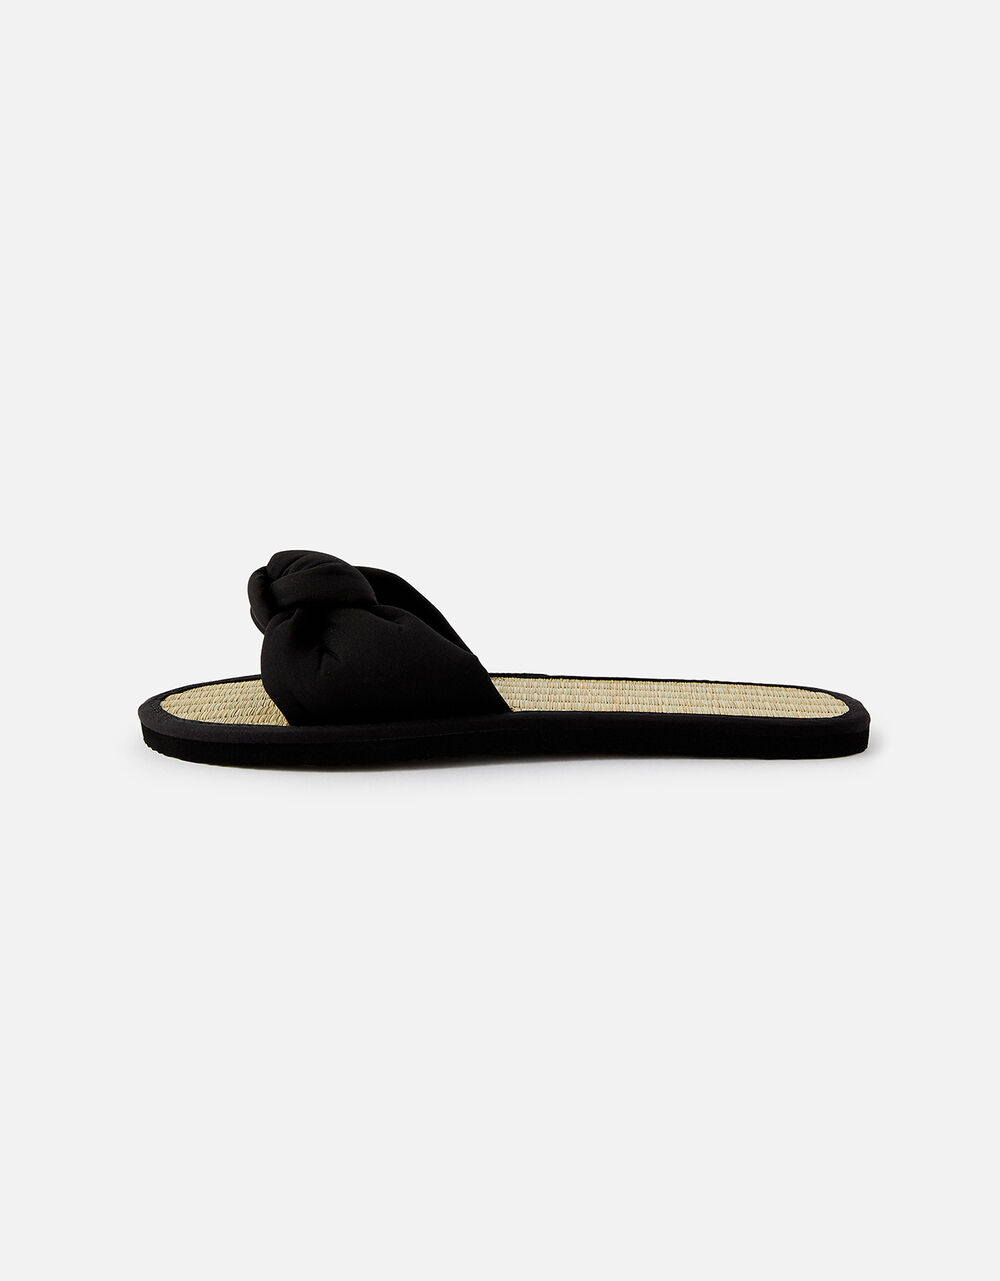 Knot Seagrass Sliders Black | Flip flops | Accessorize UK